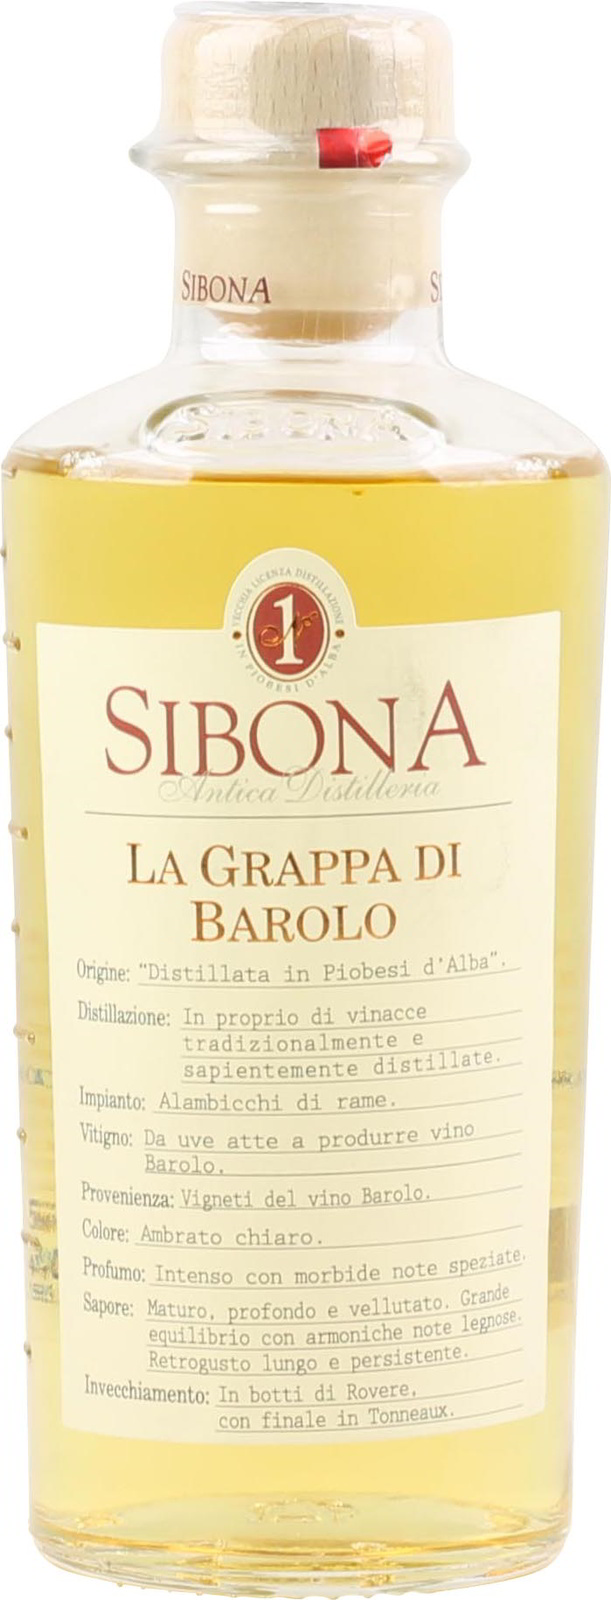 Kaufen Sie Sibona Barolo den di hier g Grappa 0,5 Liter